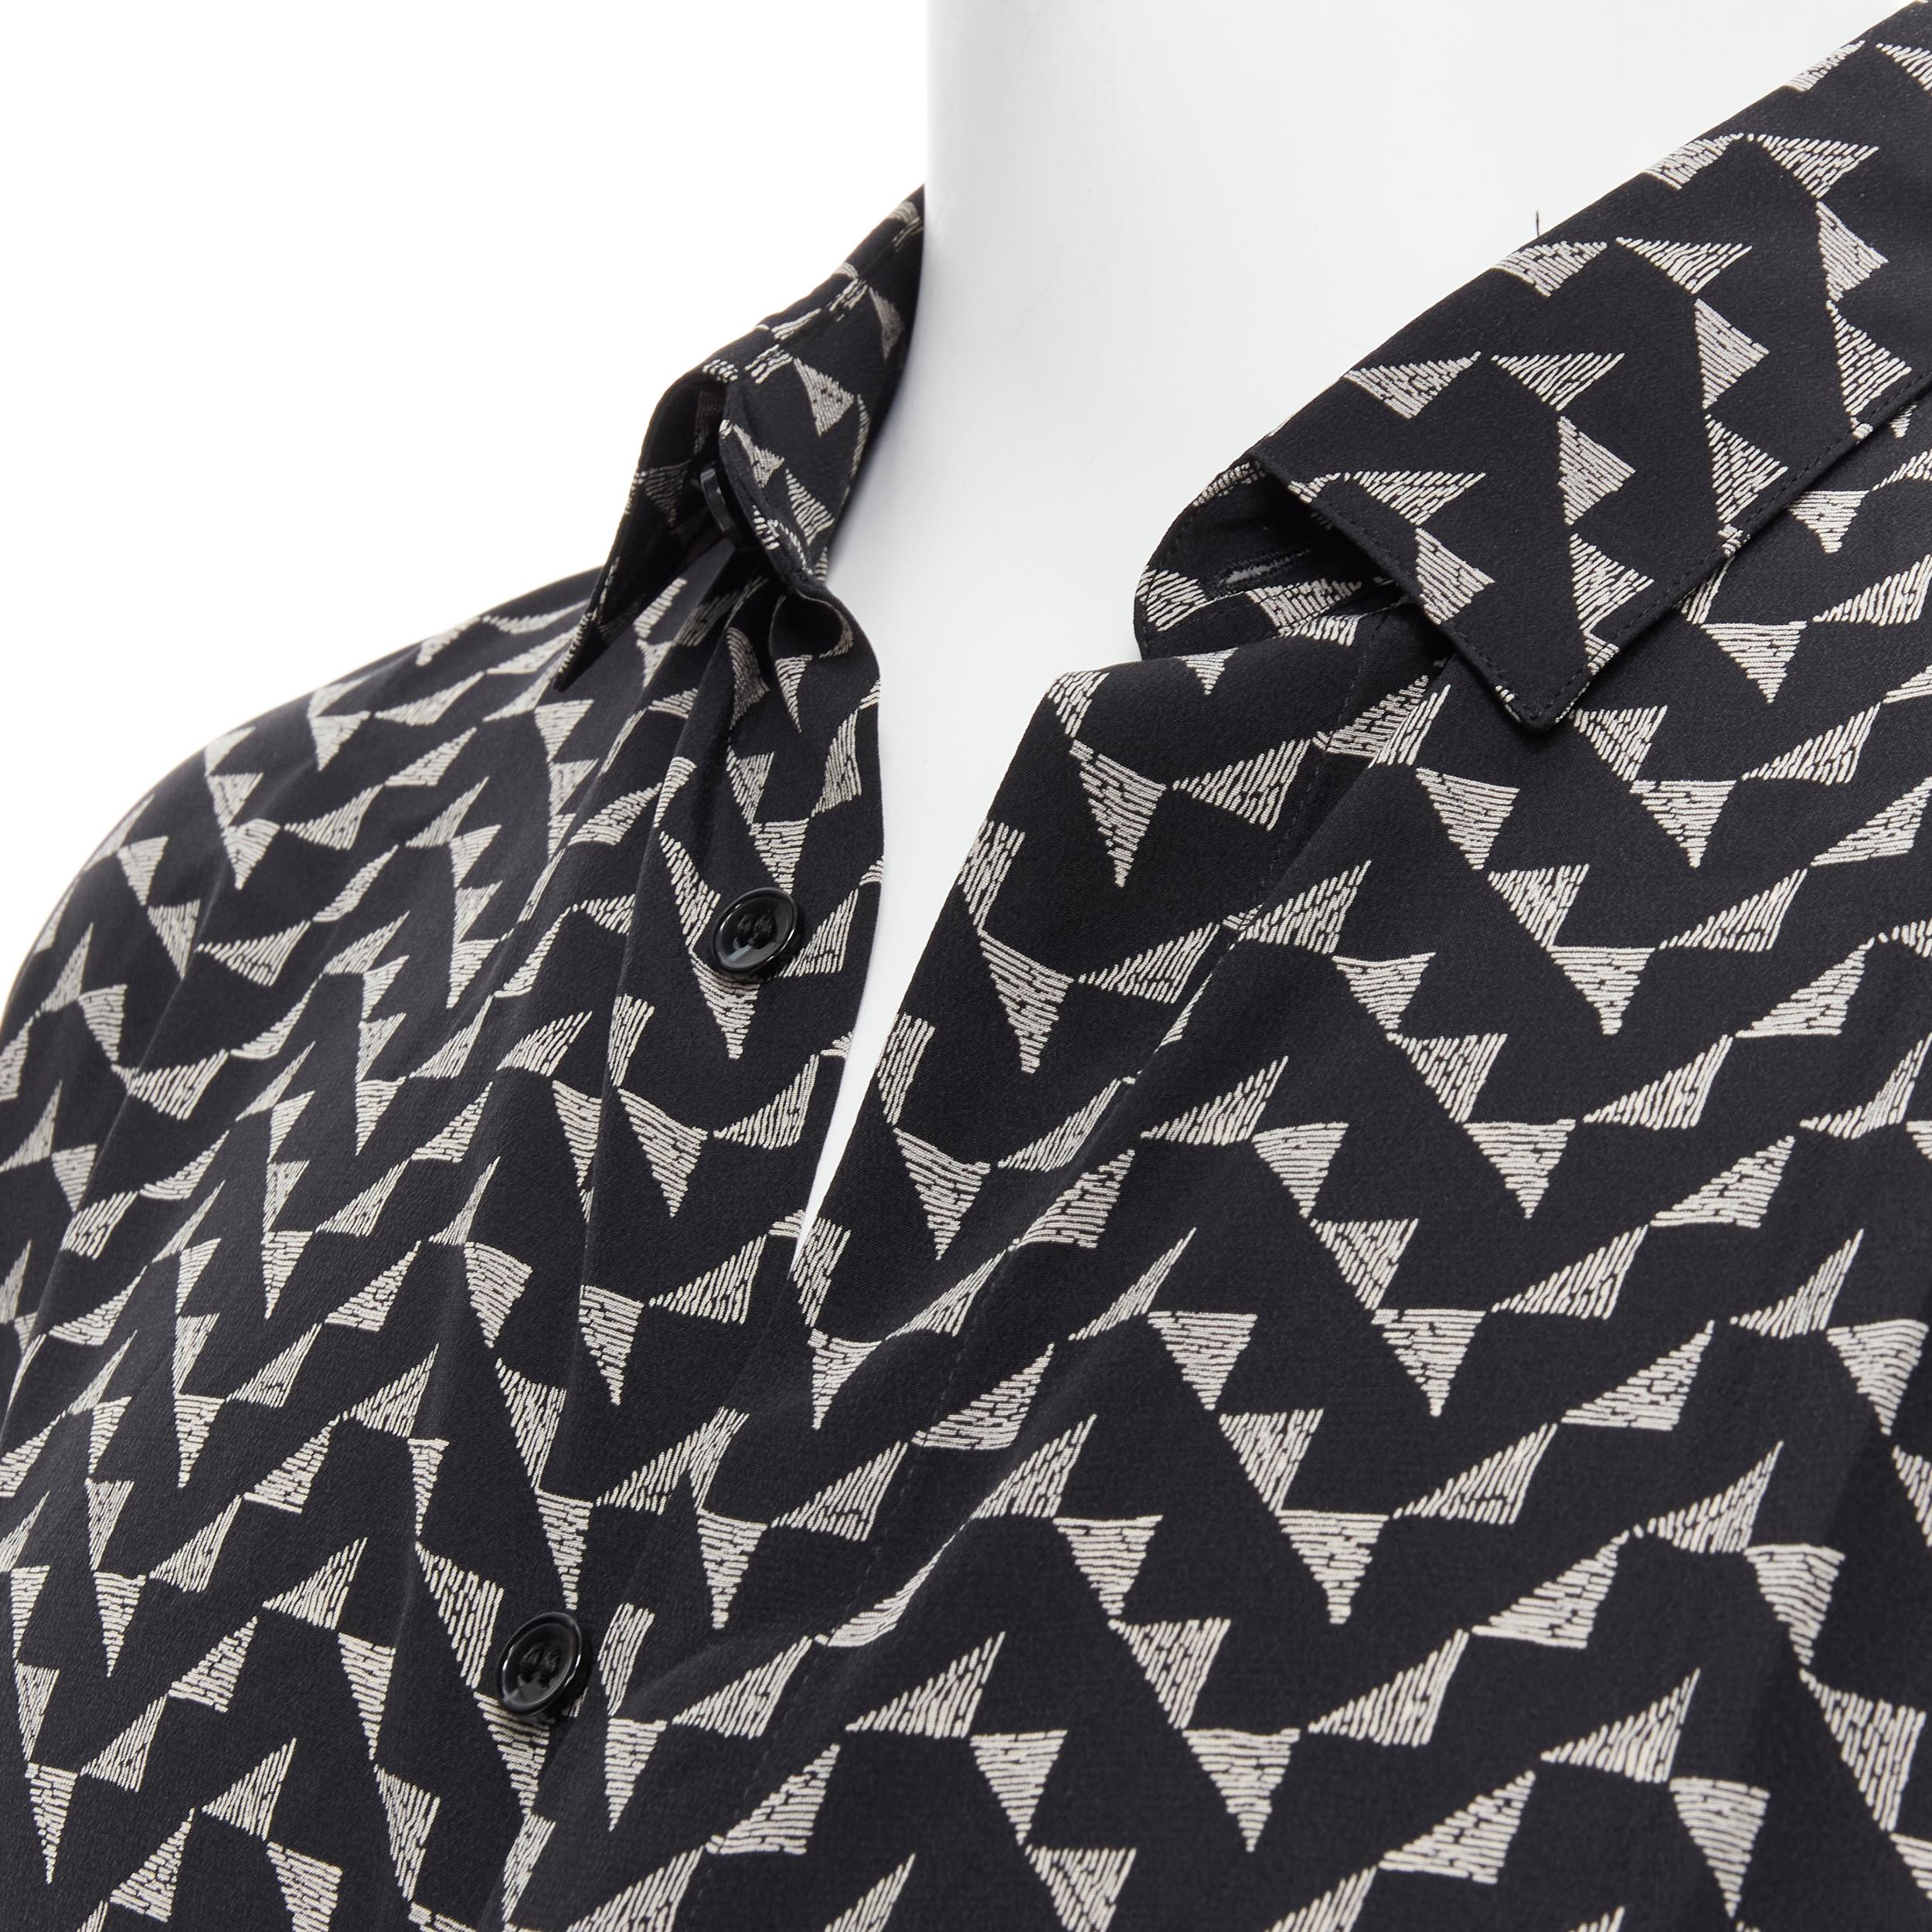 new SAINT LAURENT 2019 100% silk black geometric chevron print shirt EU41 L 
Reference: TGAS/B01775 
Brand: Saint Laurent 
Material: Silk 
Color: Black 
Pattern: Geometric 
Closure: Button 
Extra Detail: Concealed button front closure. 
Made in: